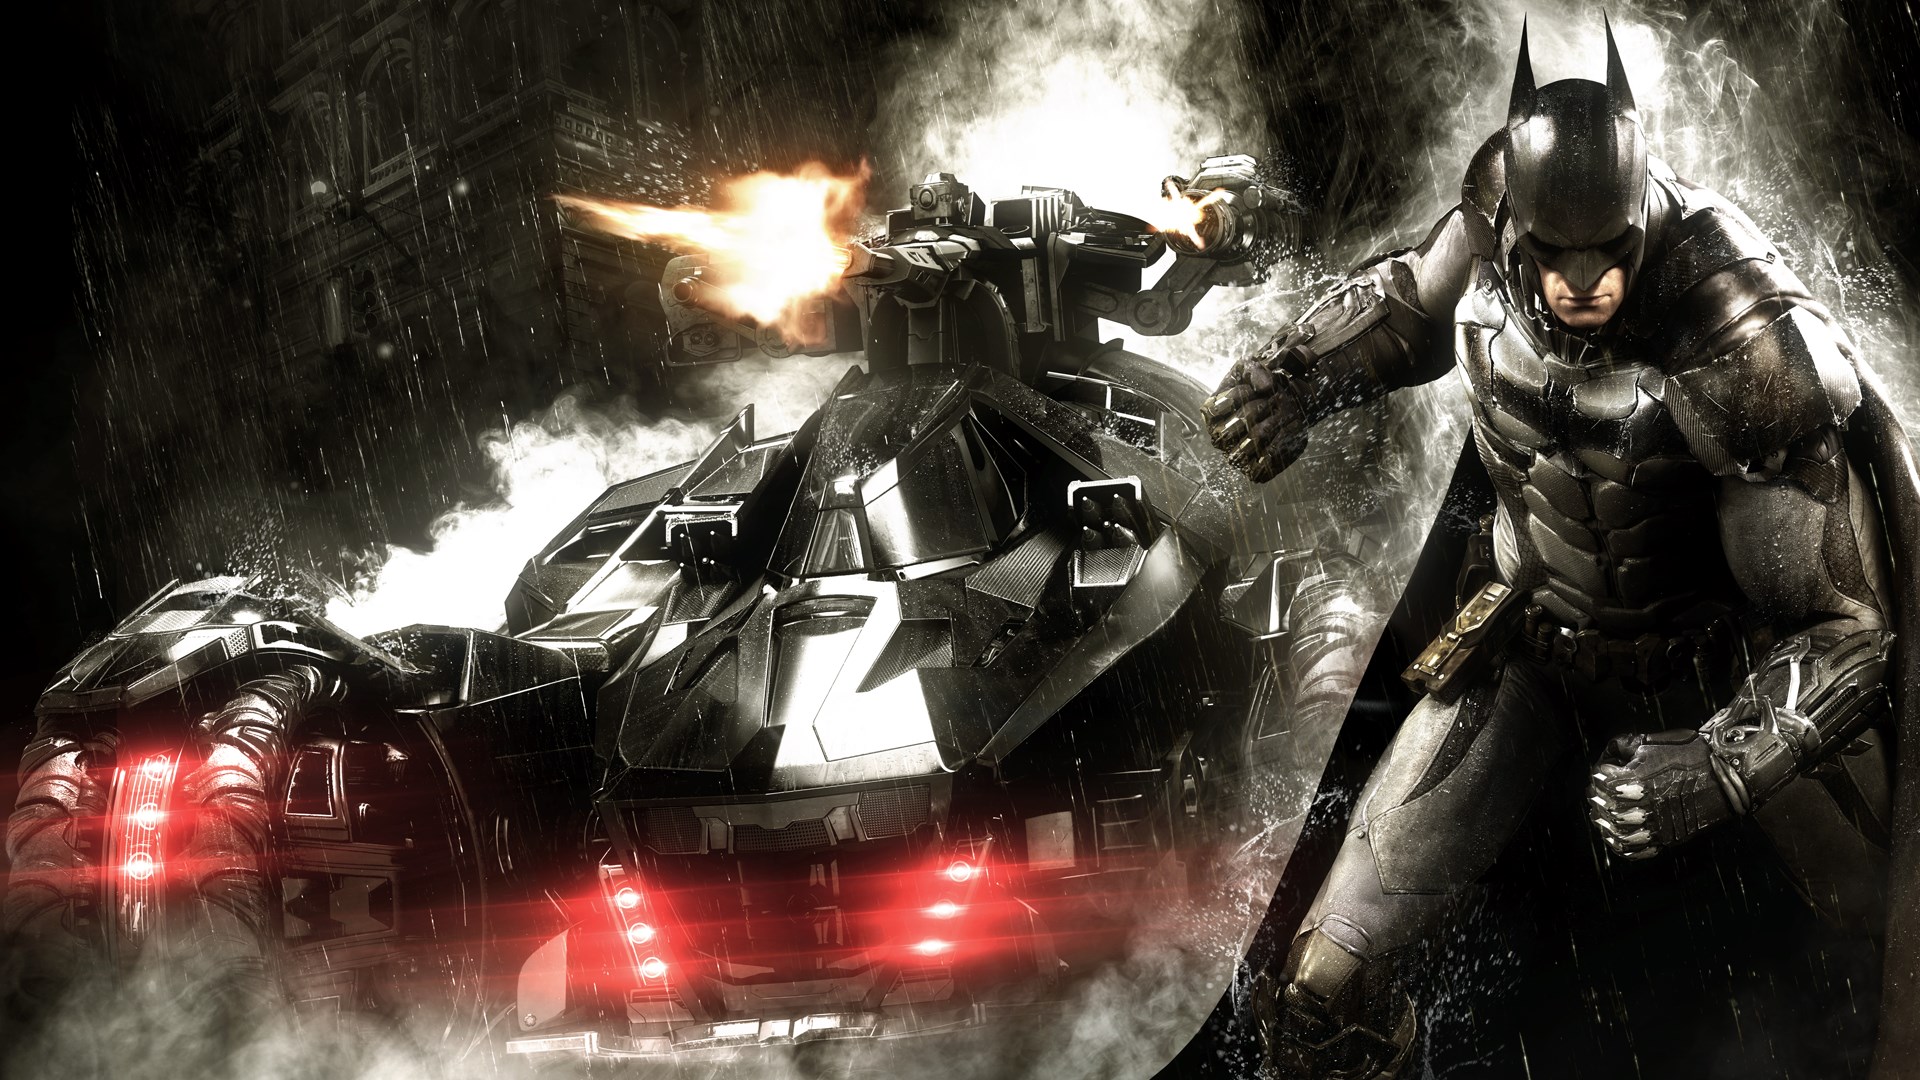 Batman™: Arkham Knight Original Arkham Batman Skin